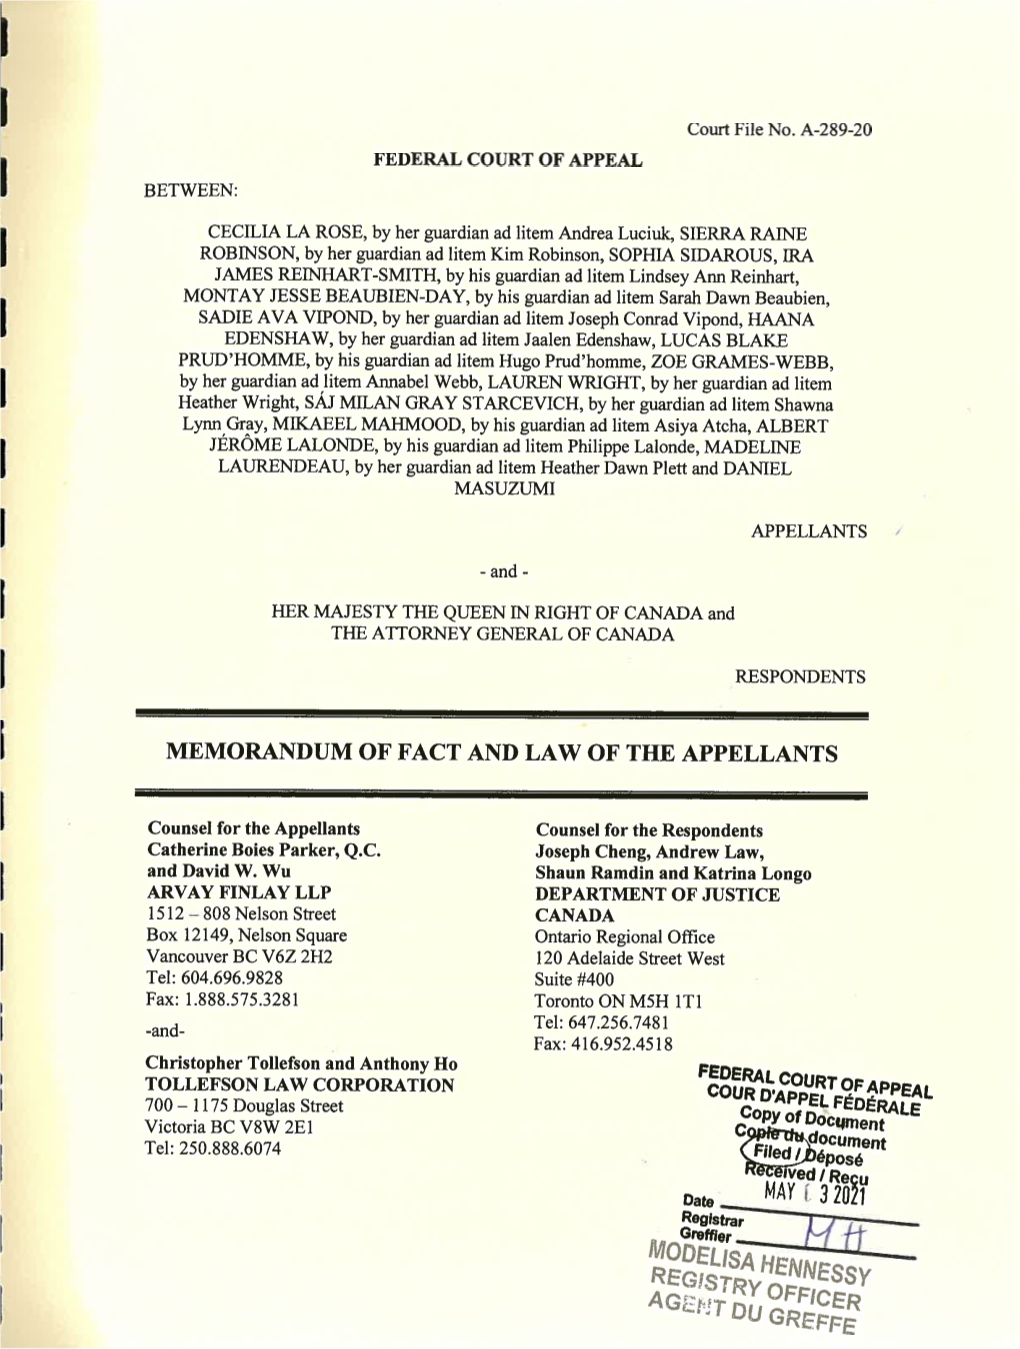 Memorandum of Fact and Law of the Appellants